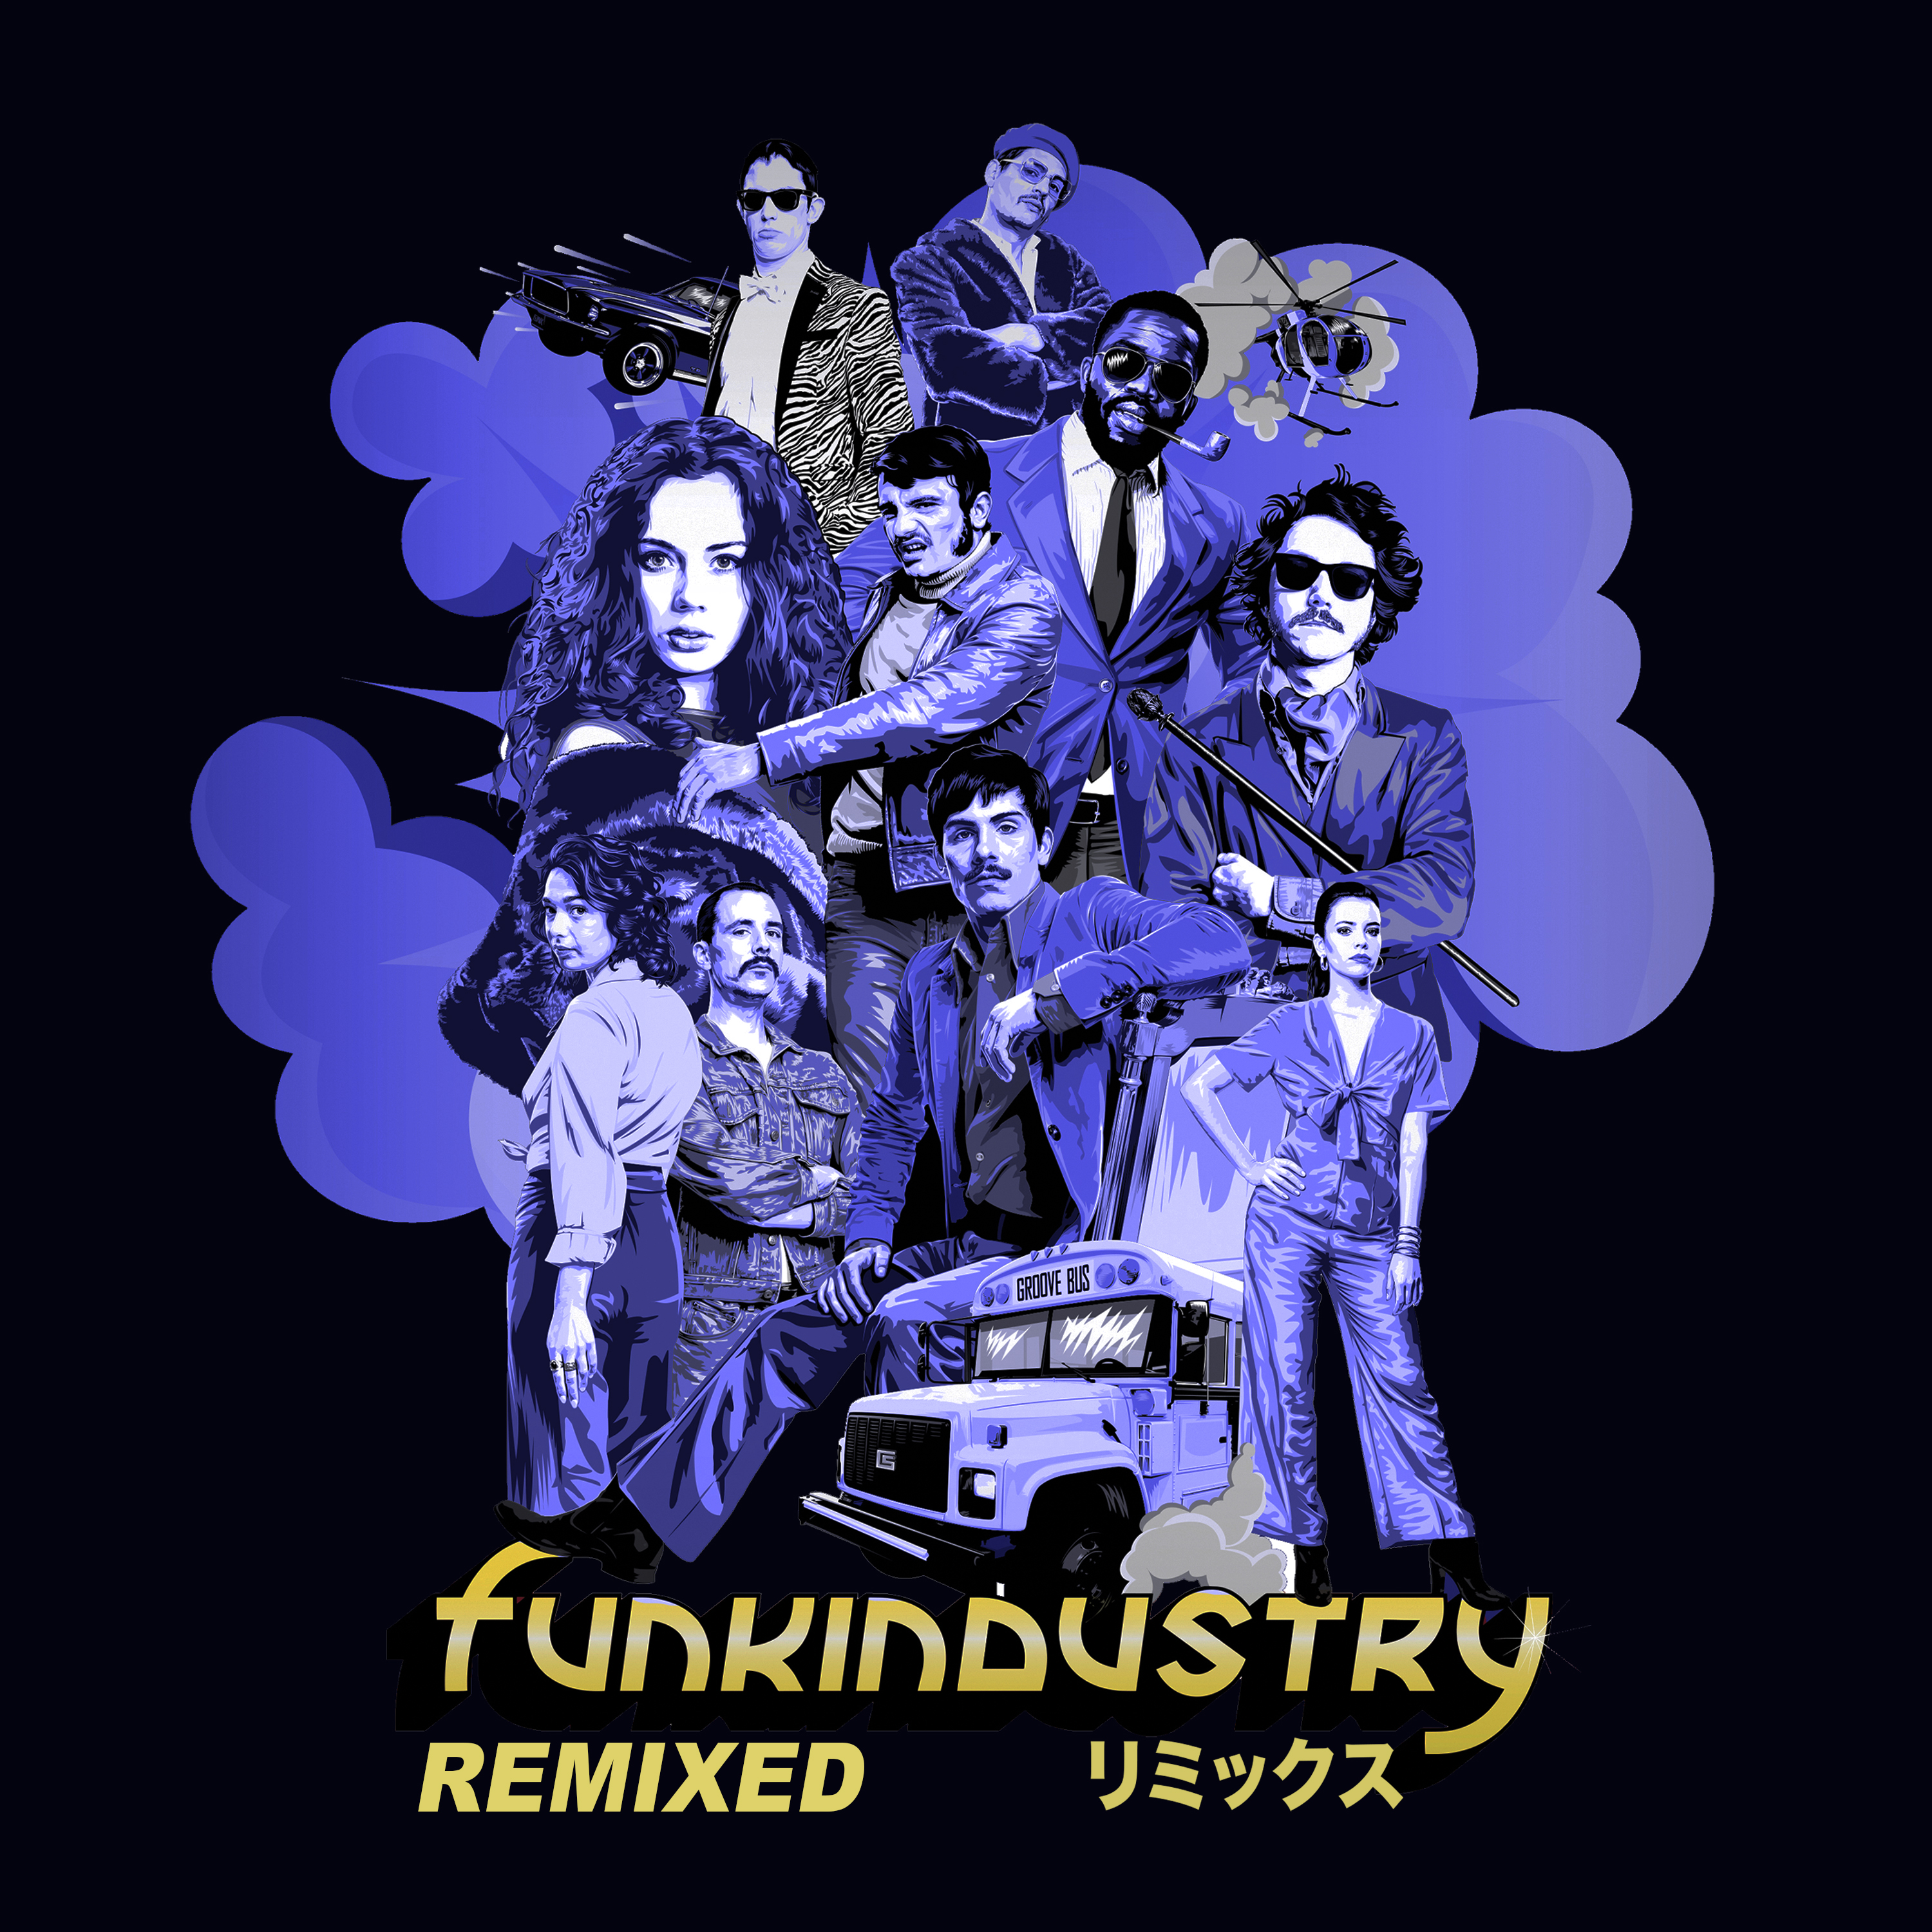 Funkindustry remixed